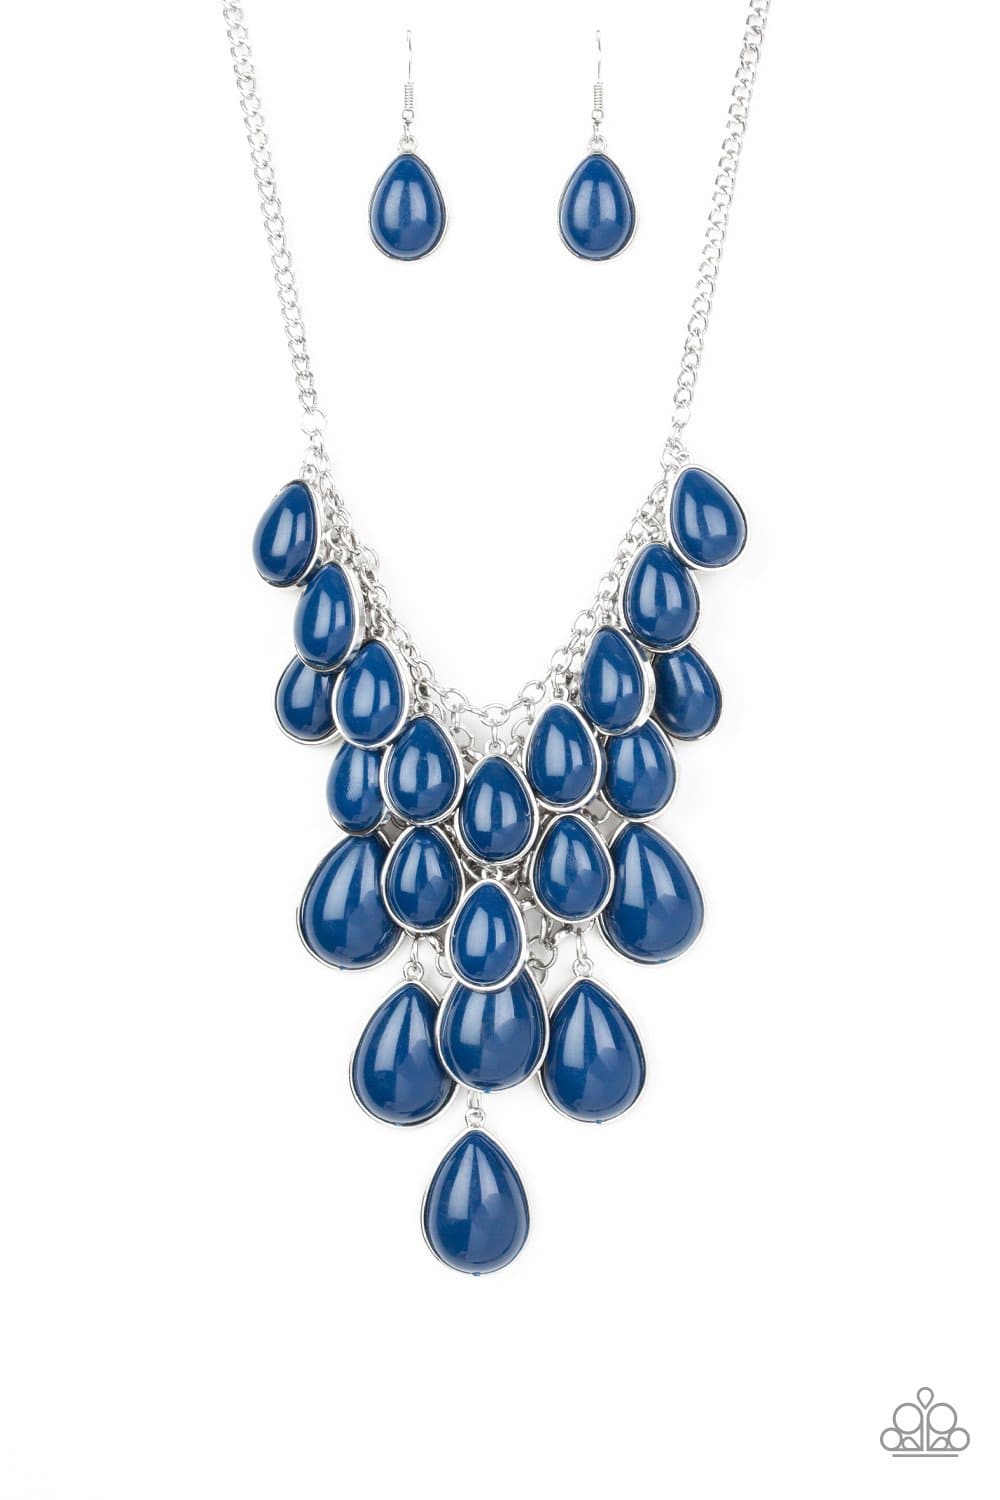 Shop Til You TEARDROP - Evening Blue Necklace - Paparazzi Accessories - GlaMarous Titi Jewels